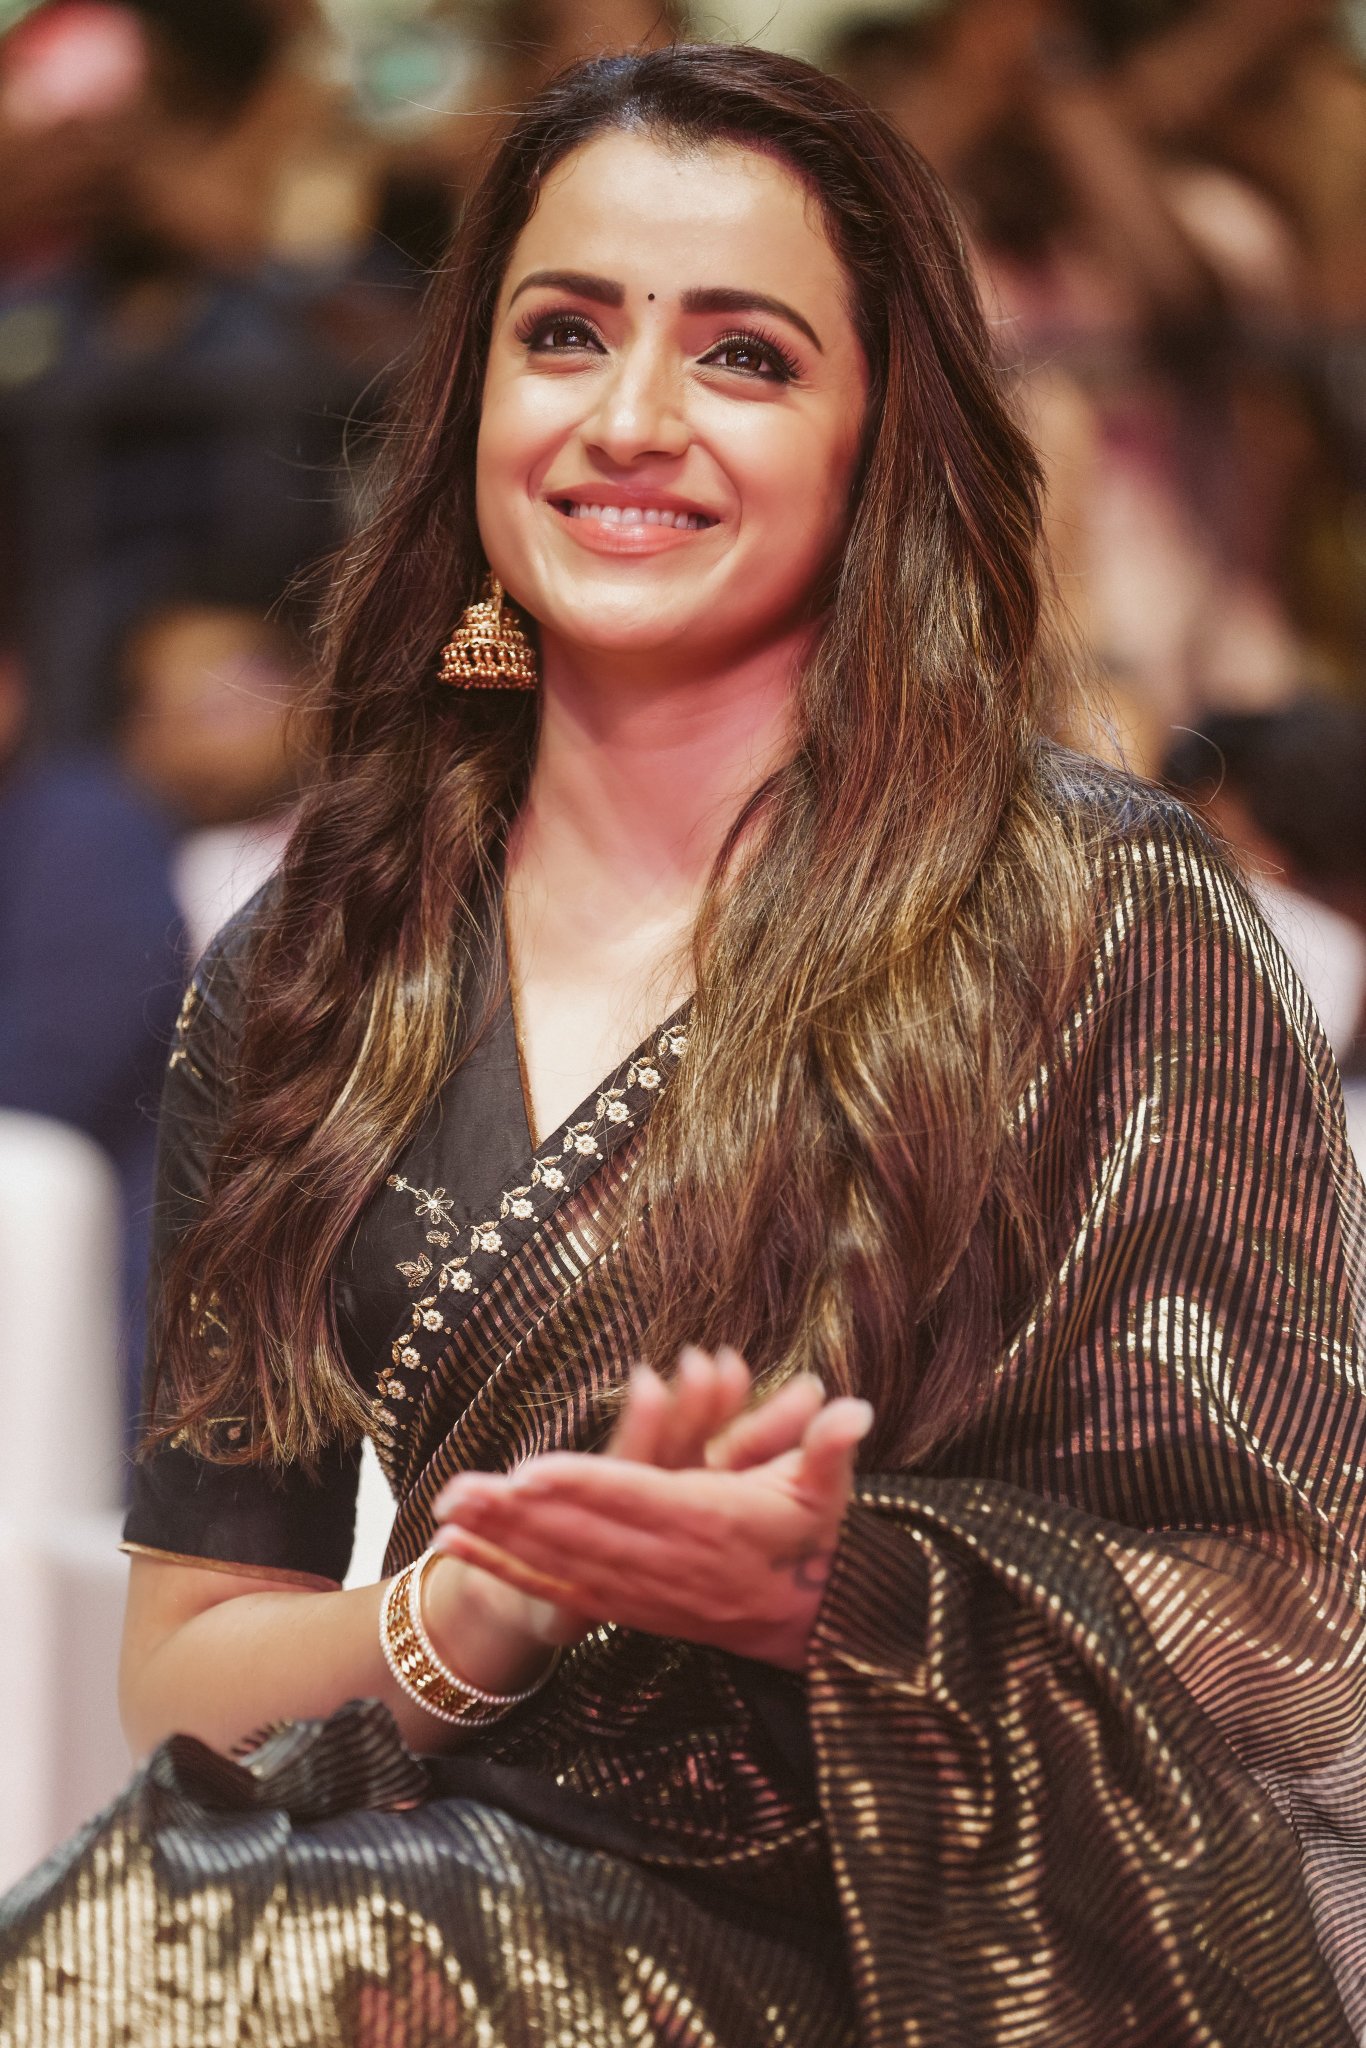 trisha tamil movie actress cute smiling best photos pics